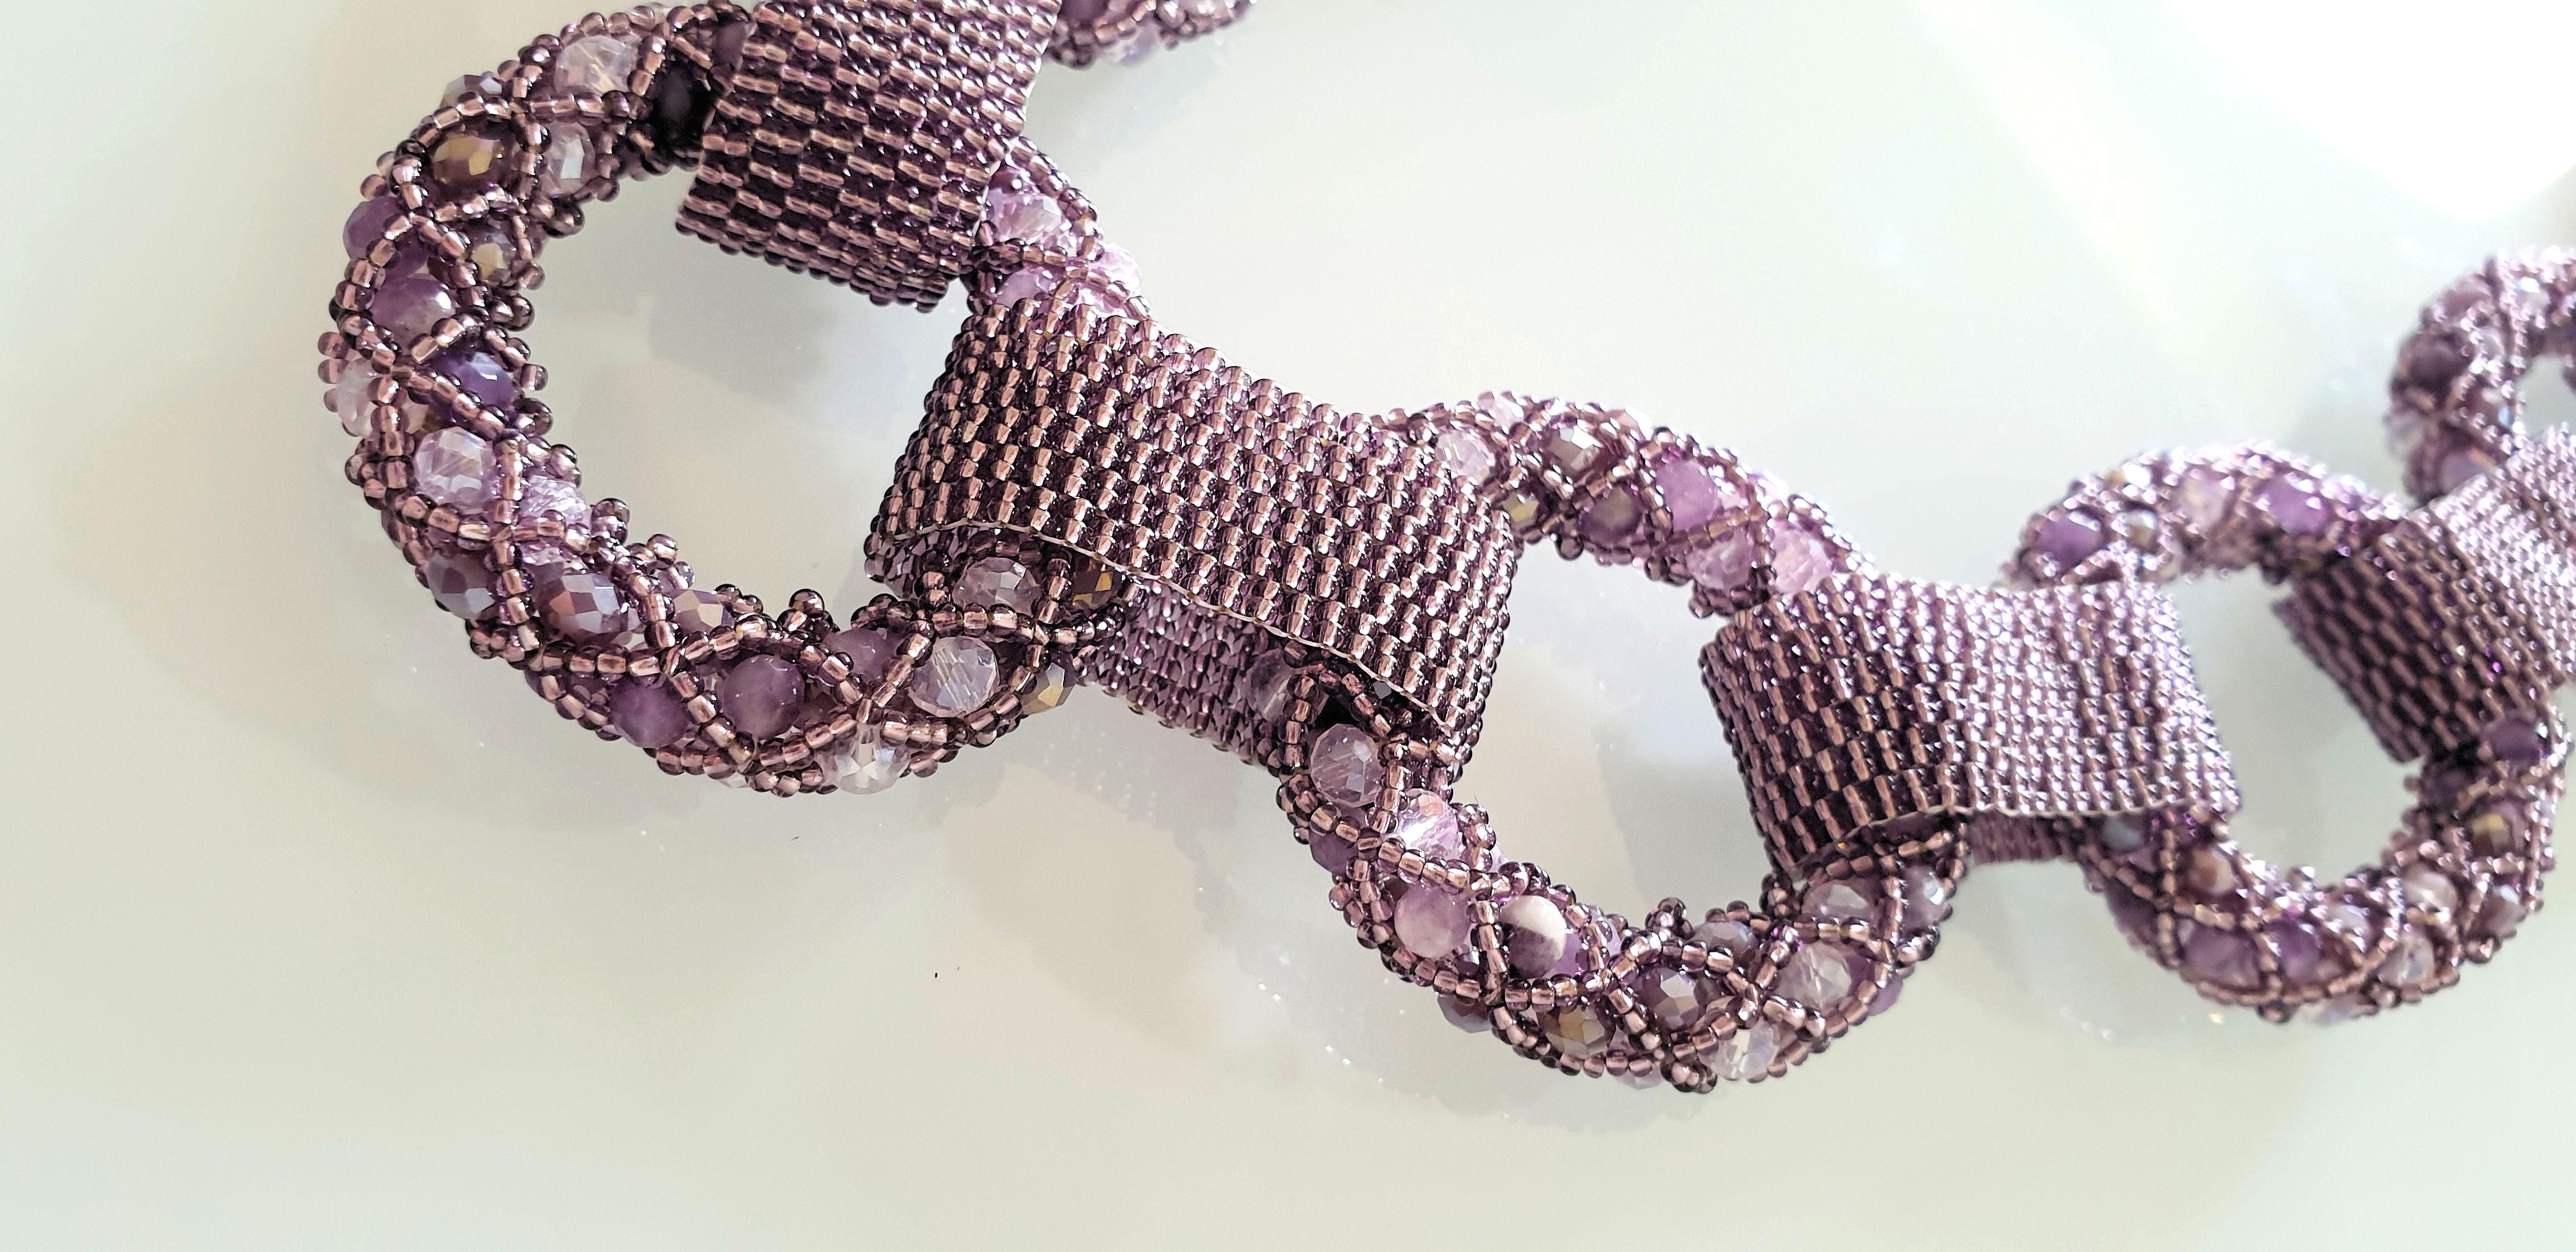 murano glass beads necklace